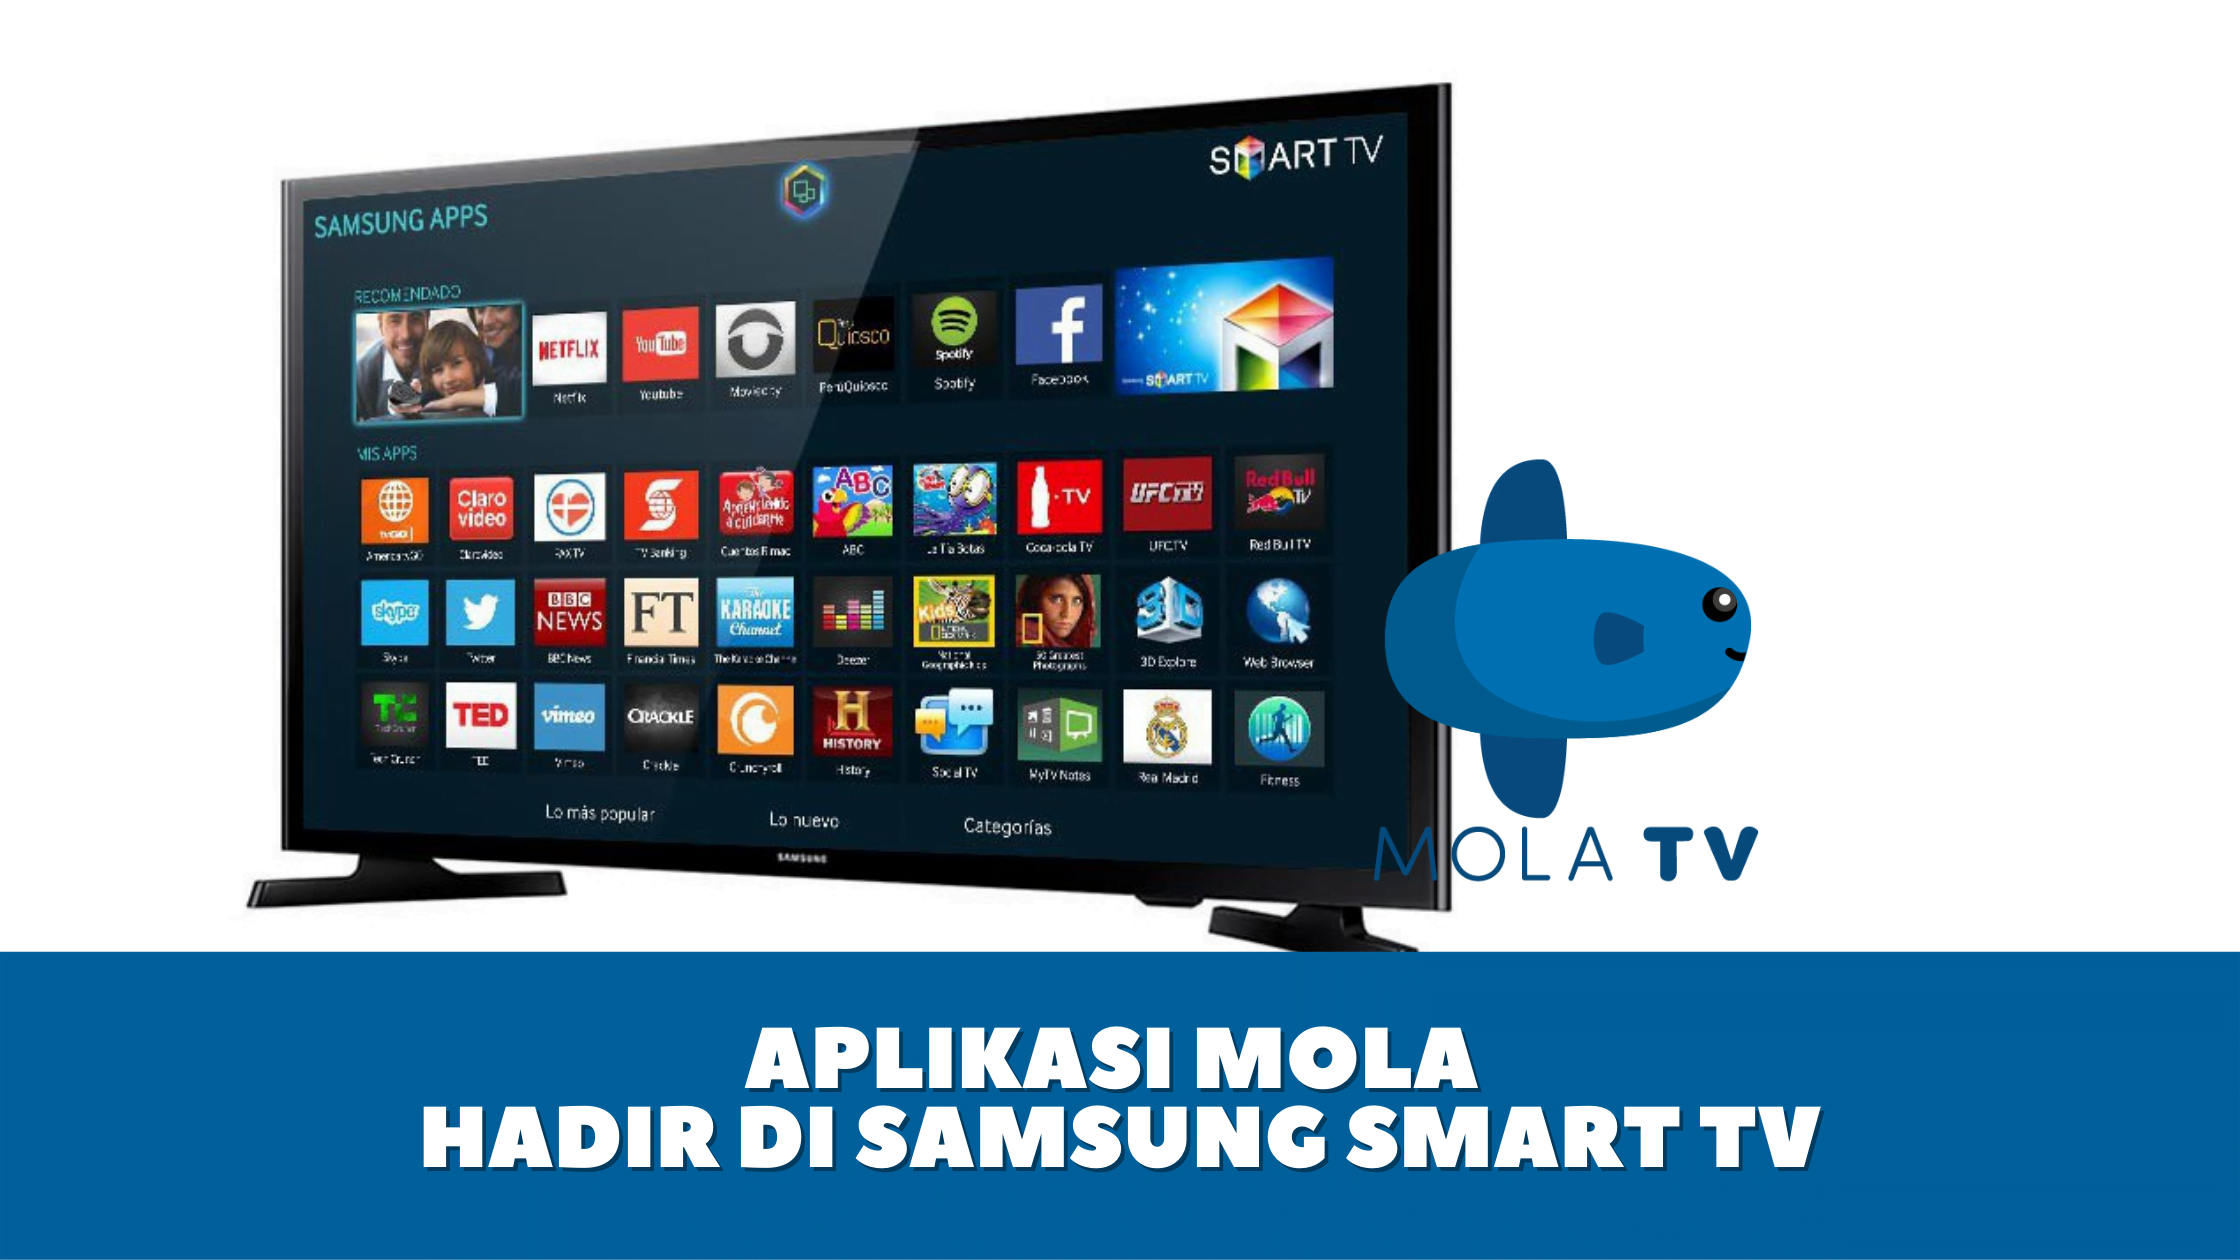 Aplikasi Mola Hadir di Samsung Smart TV